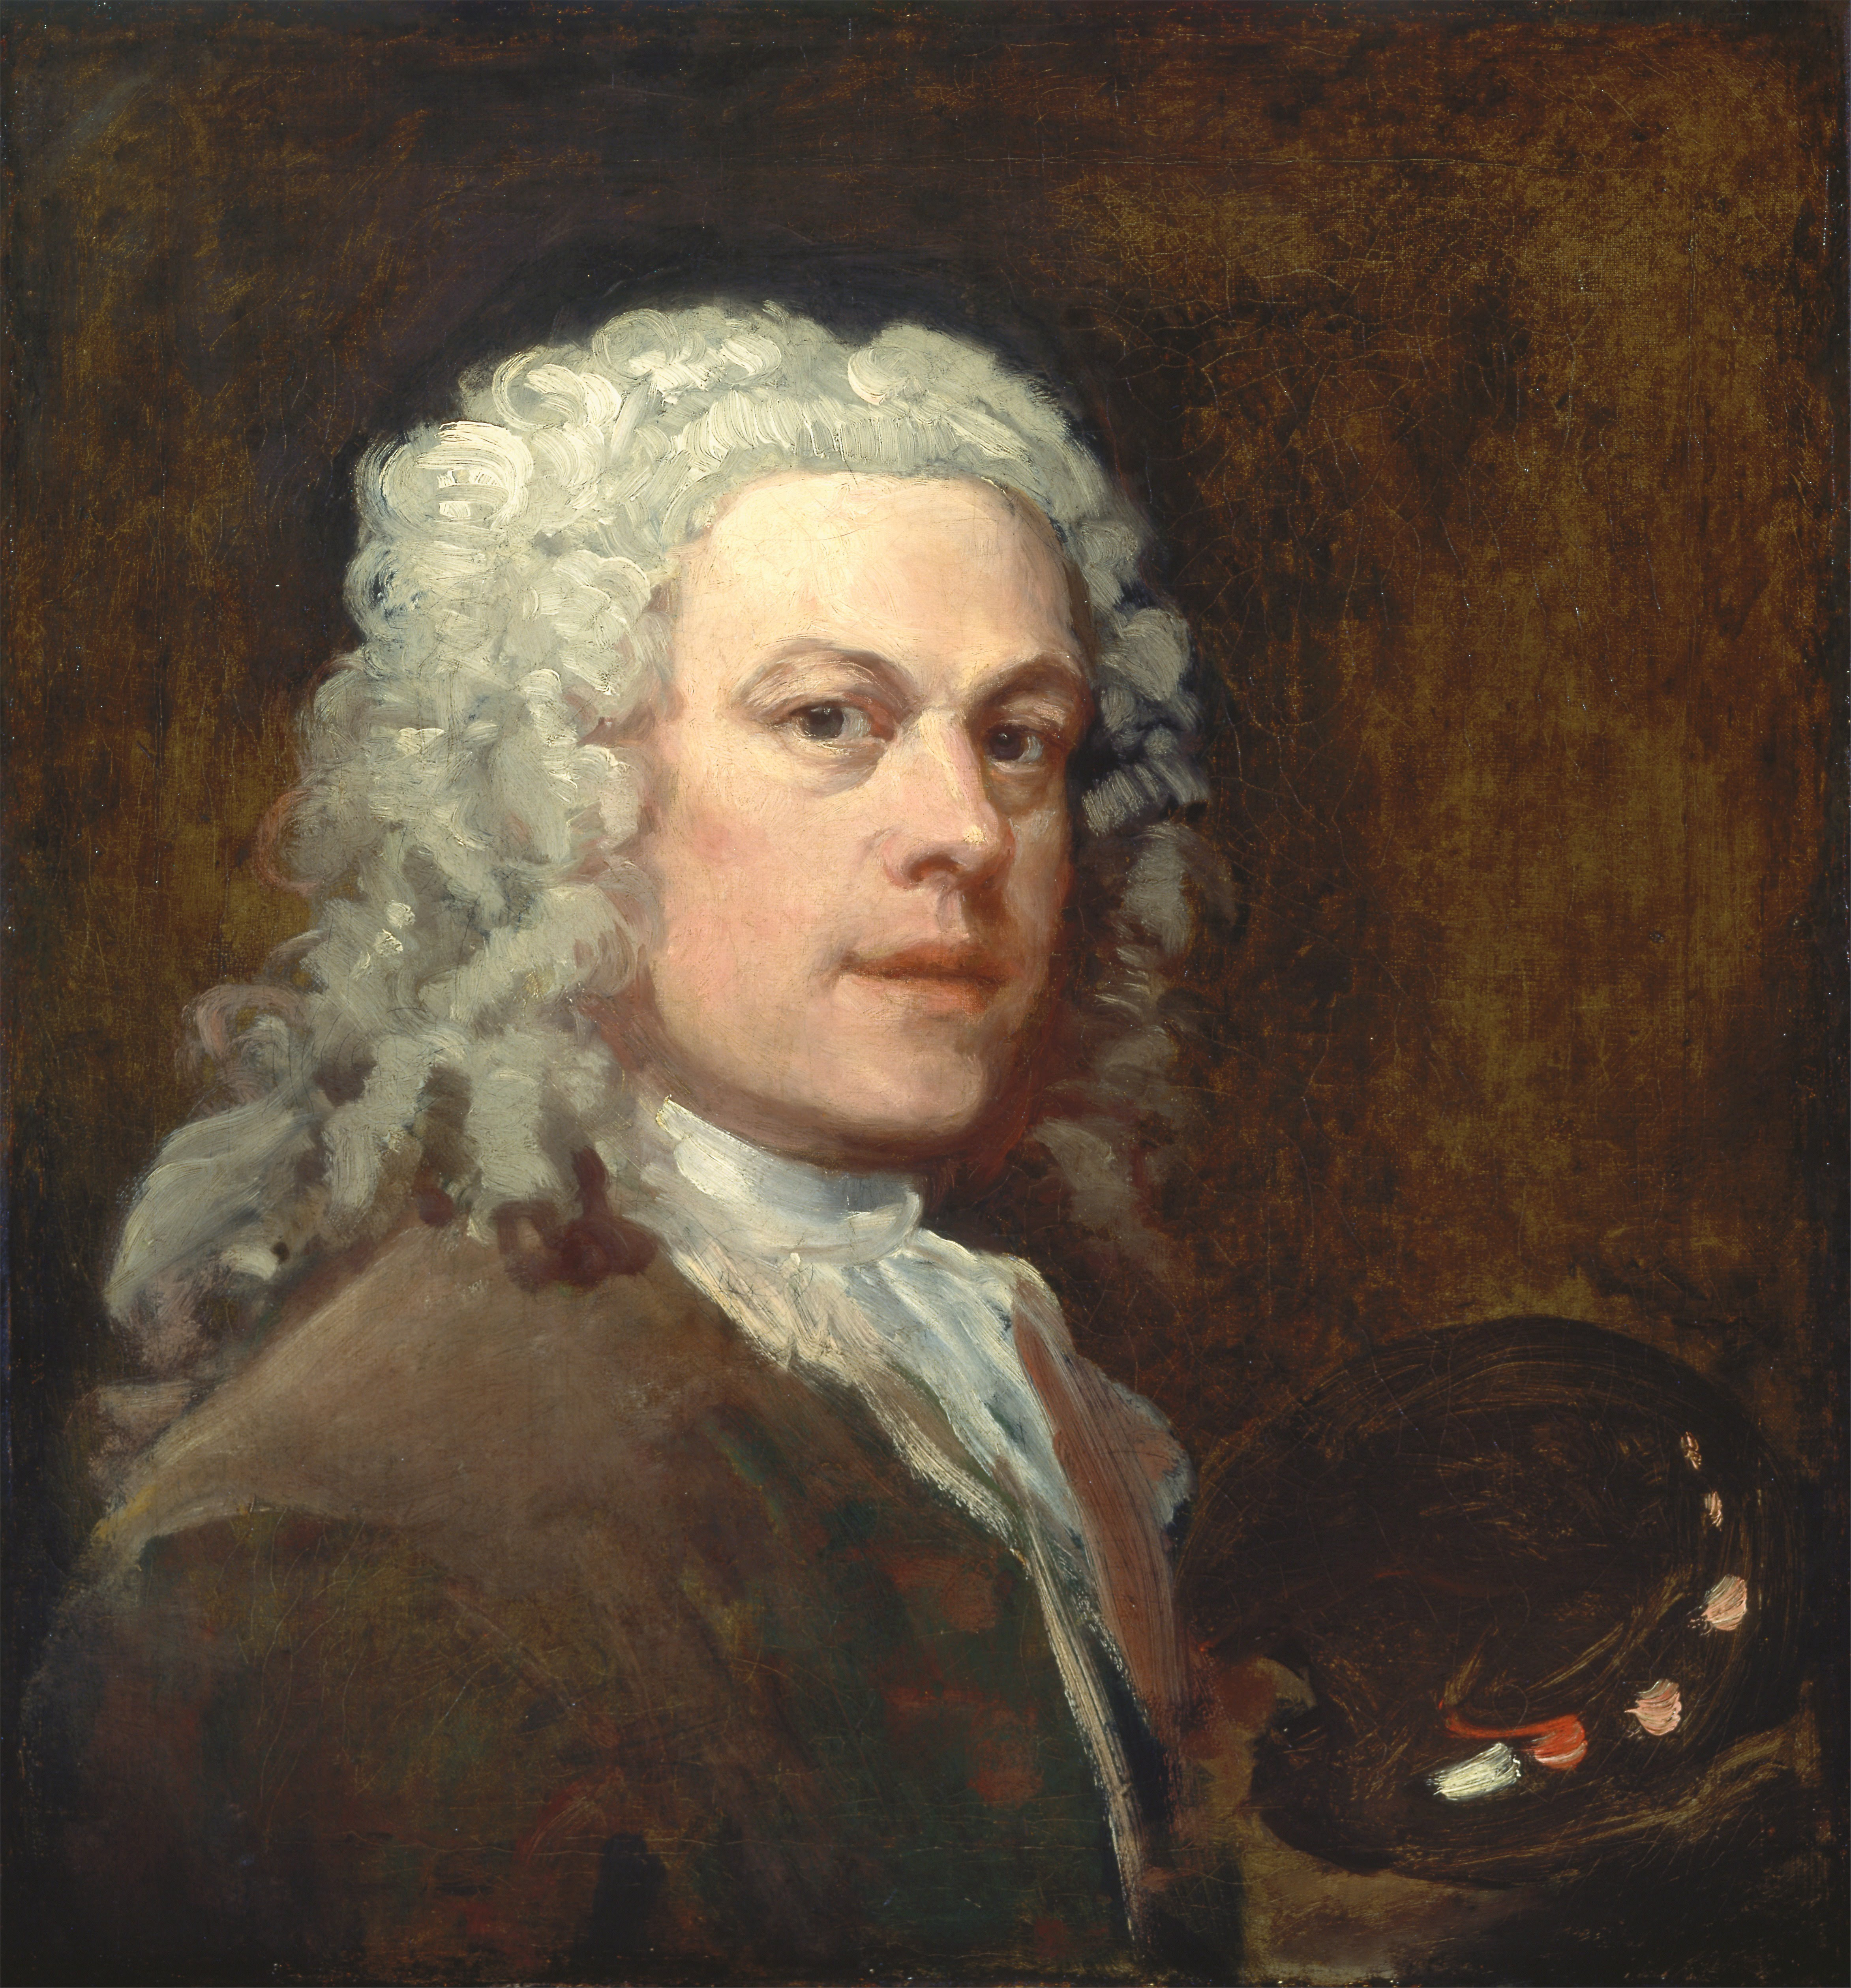 William Hogarth - 10 novembre 1697 - 26 ottobre 1764